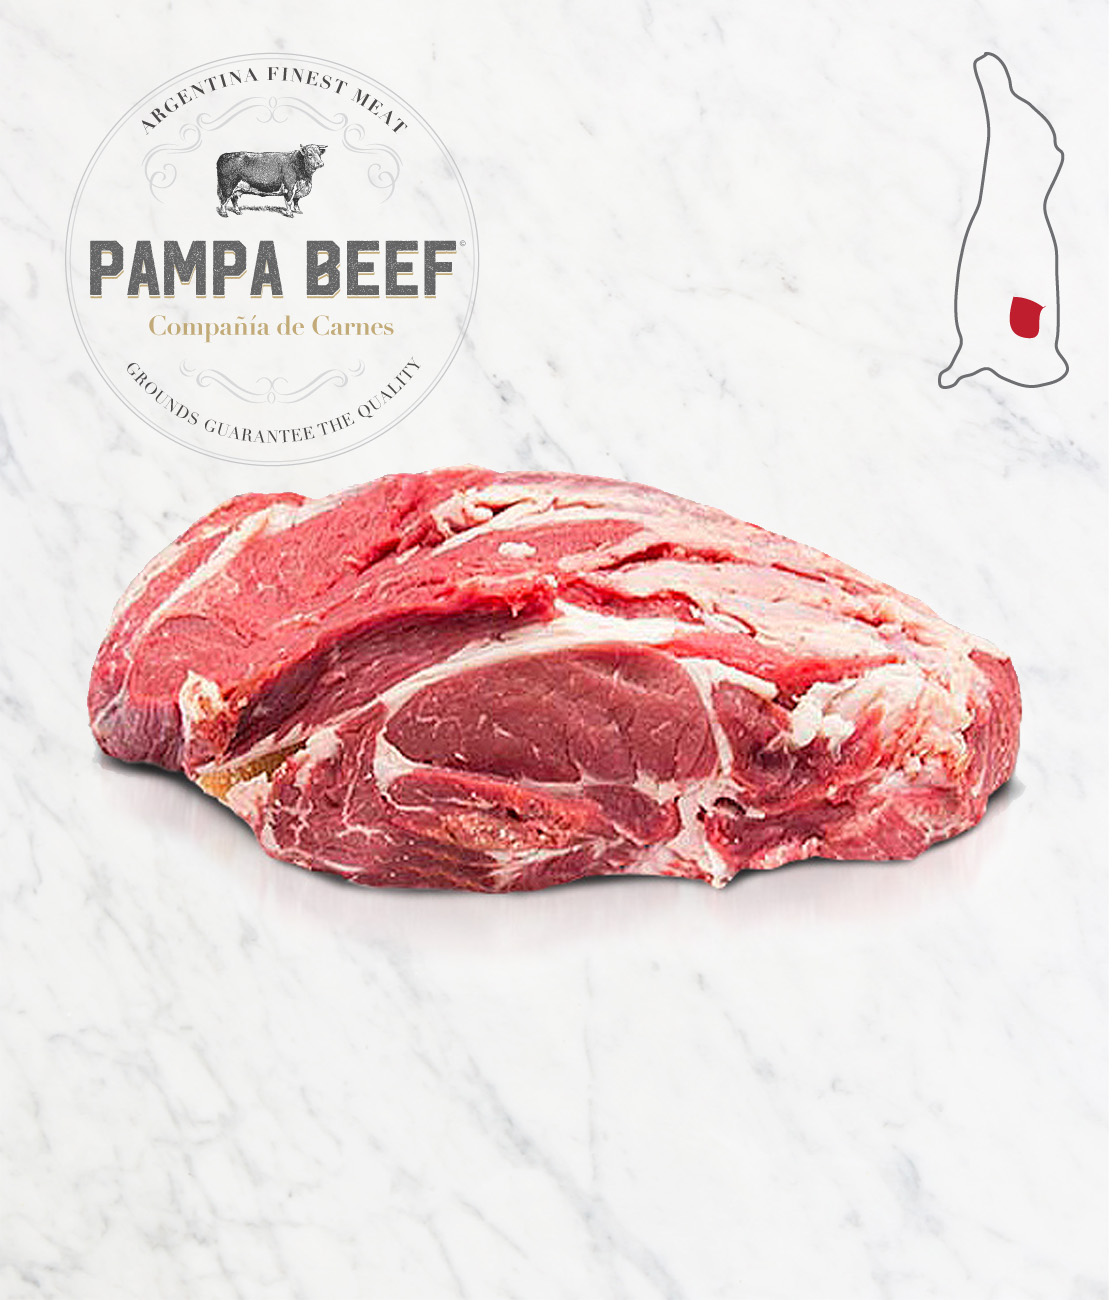 Pampa Beef Compañia de Carnes